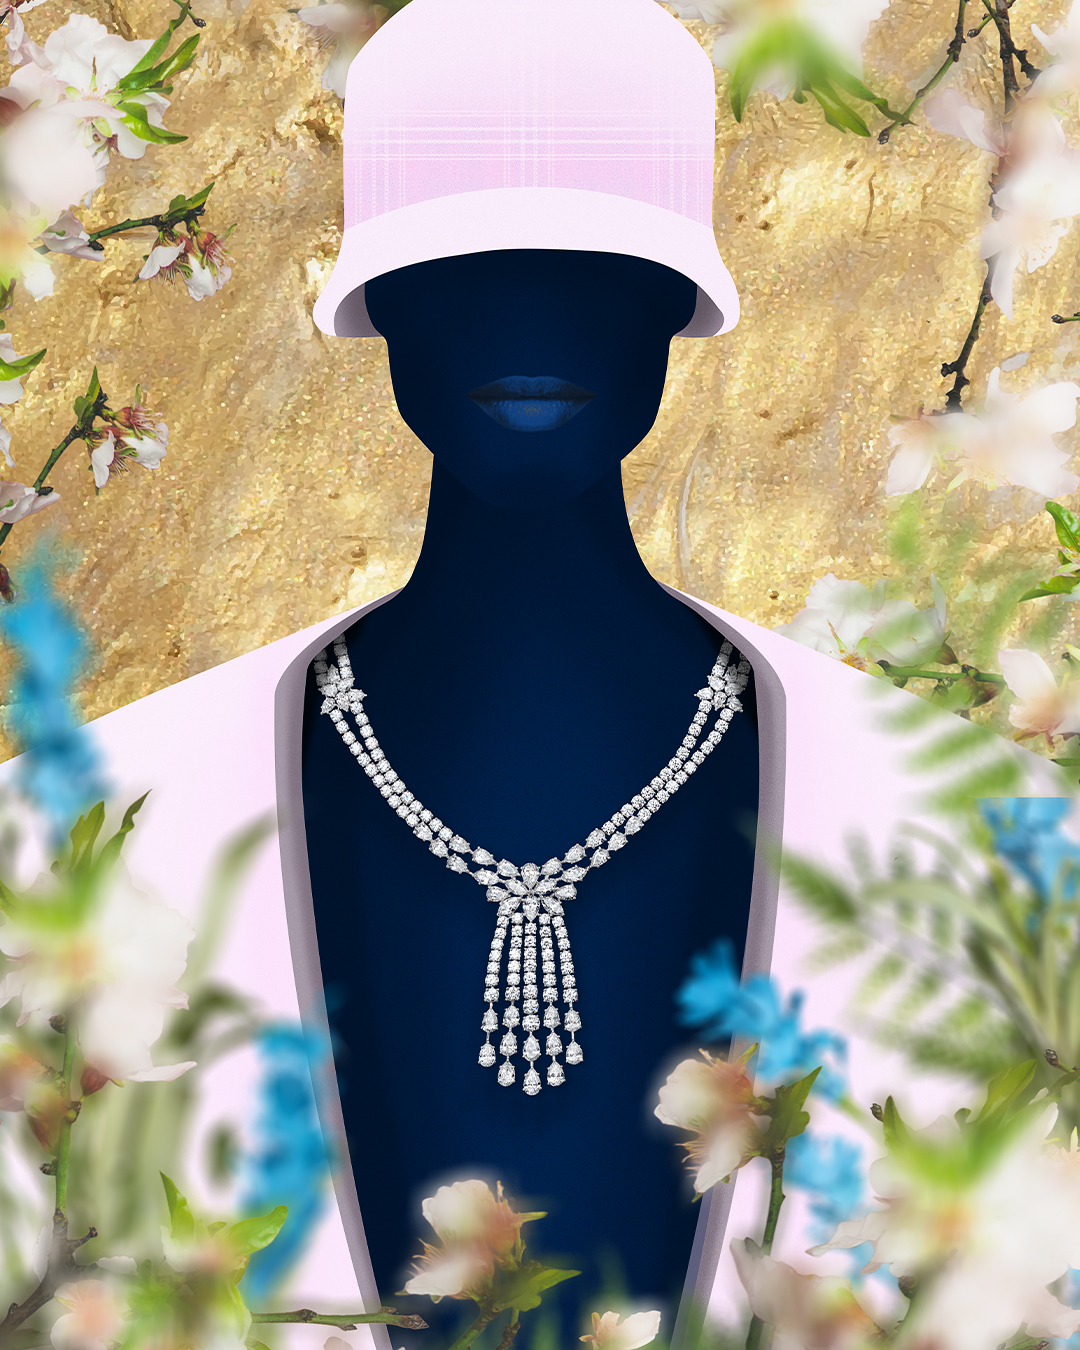 celia fabbri photography illustration chatila high jewellery diamonds parure pink girl